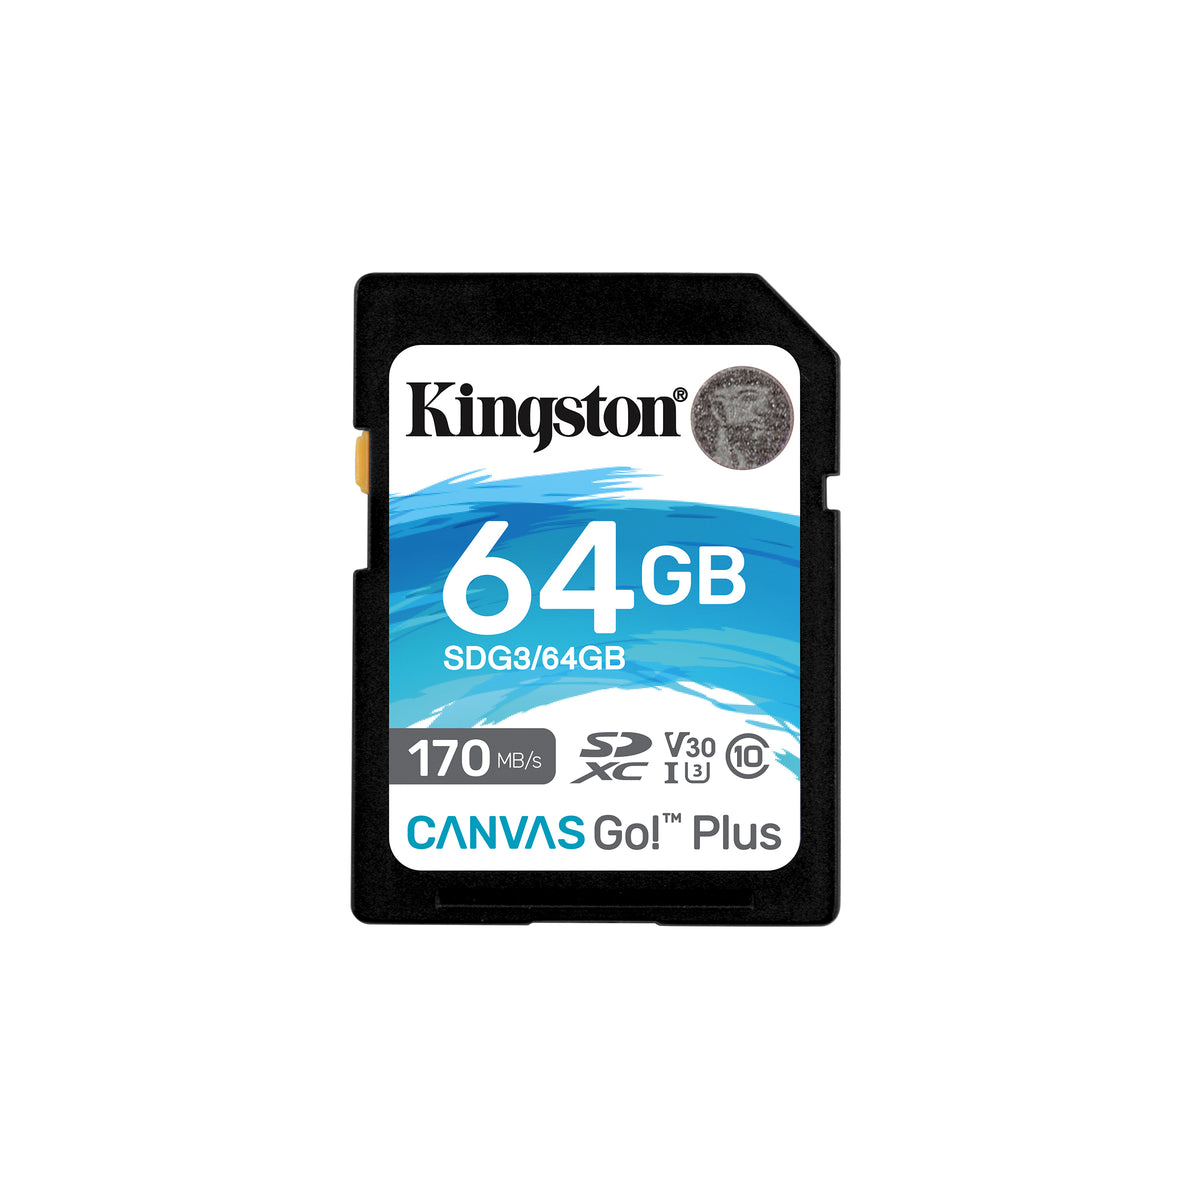 Micro SDXC karta Kingston 64GB (SDG3/64GB)